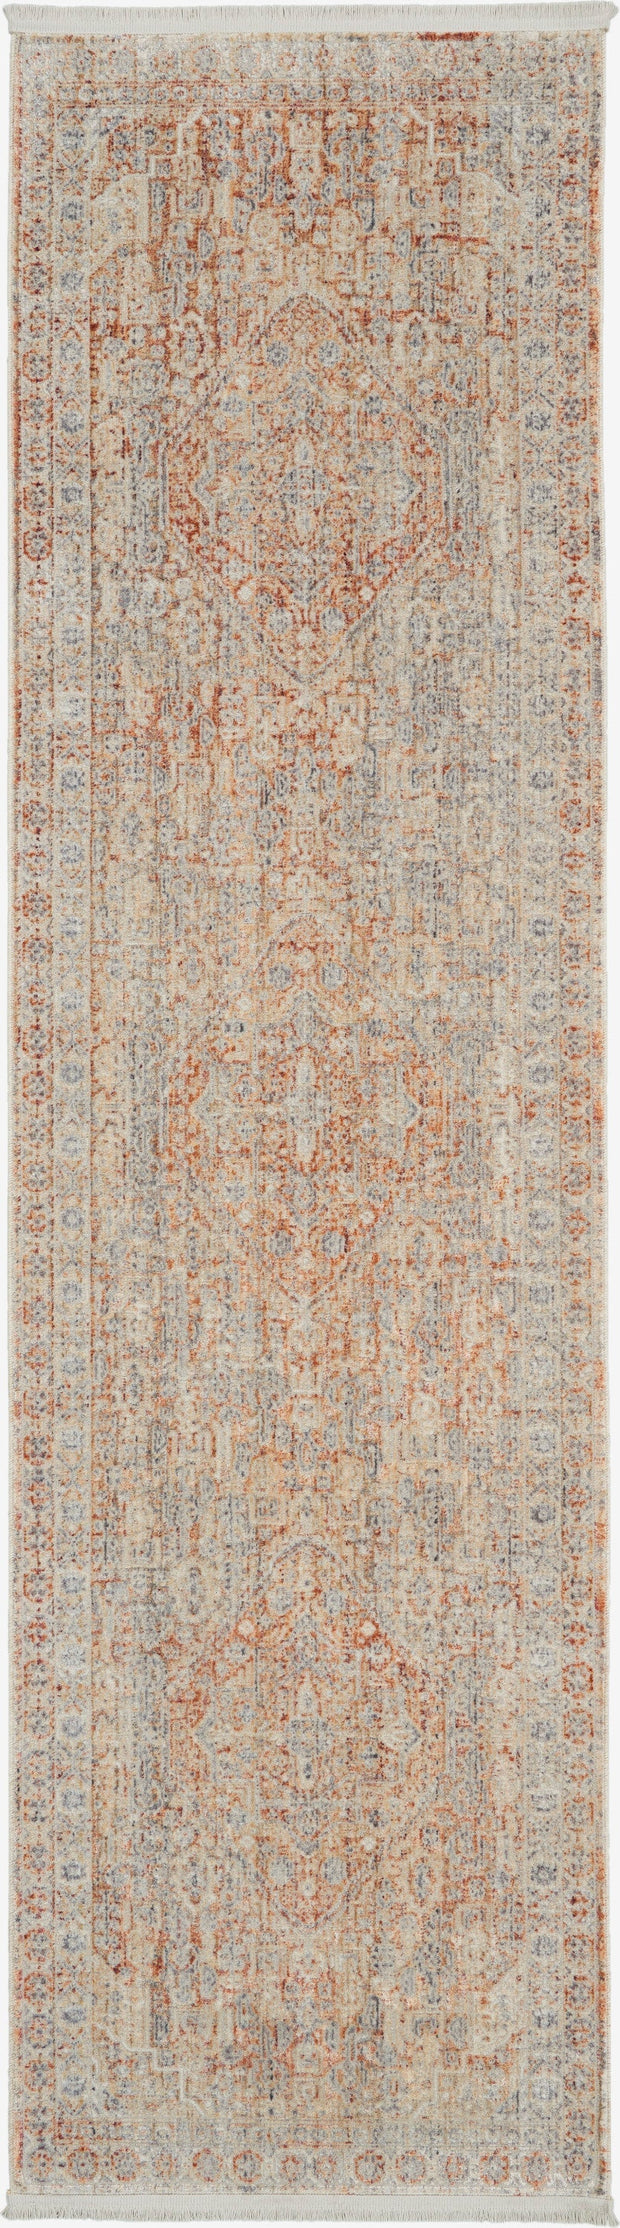 lustrous weave grey brick rug by nourison 99446752048 redo 2